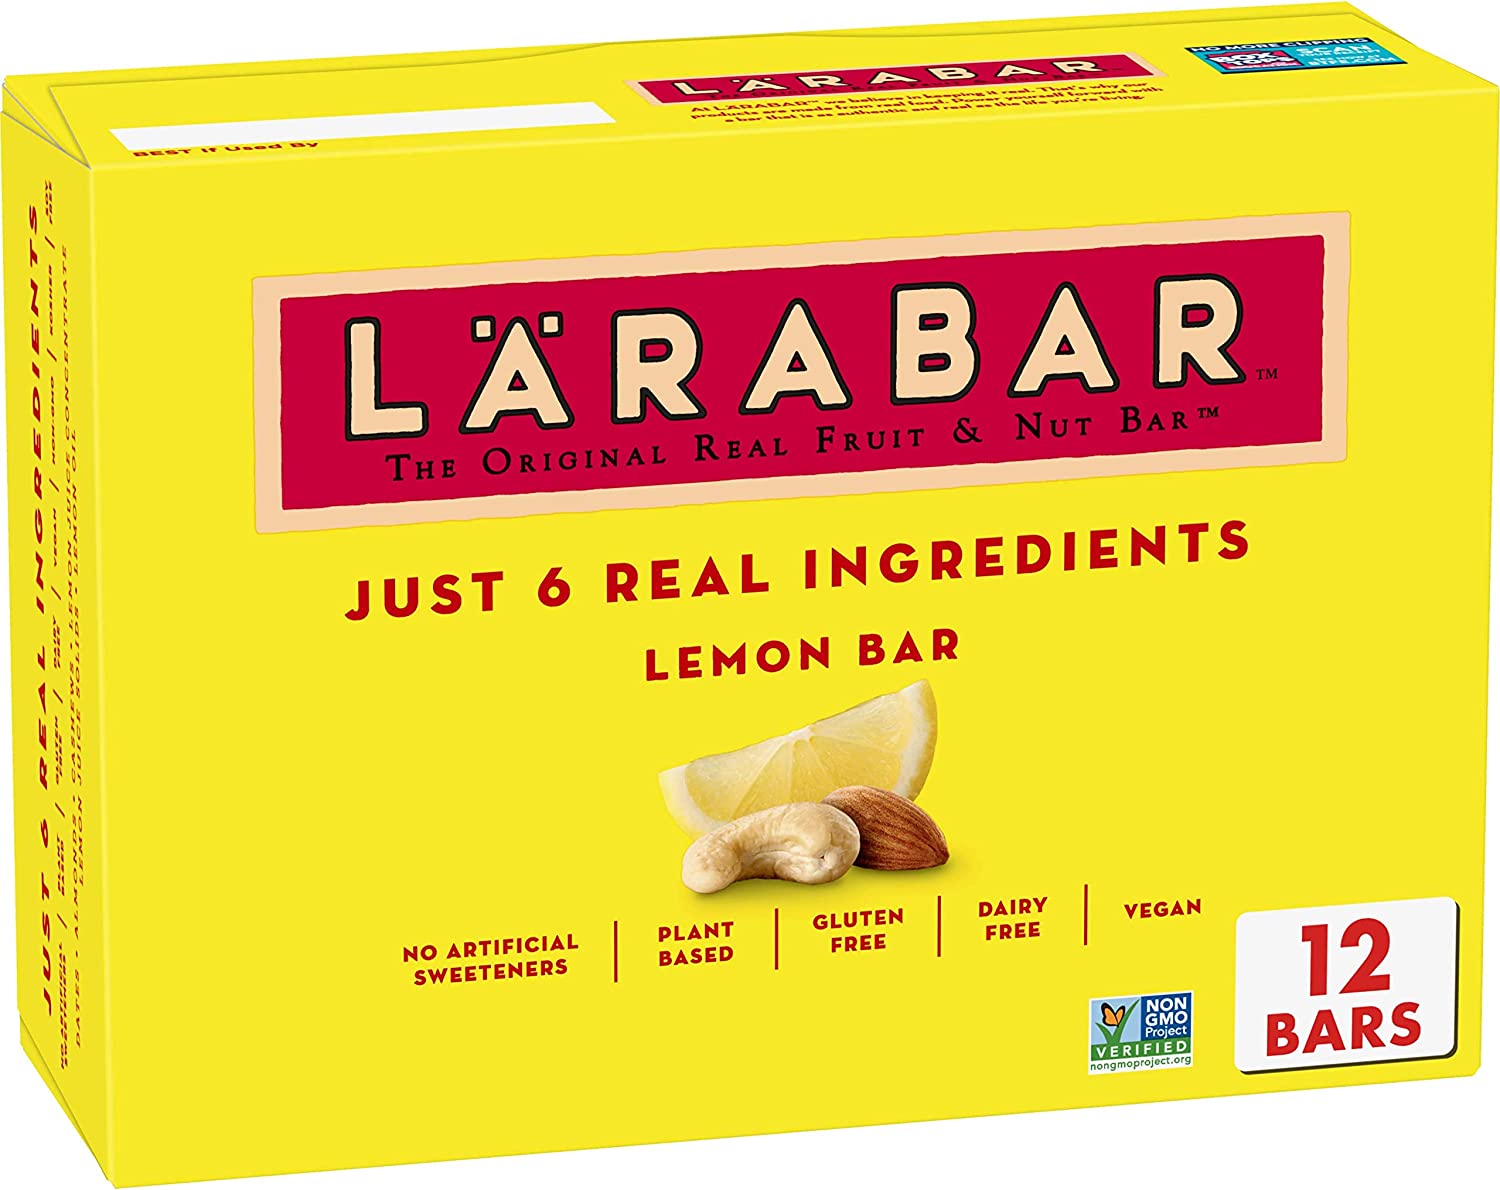 Larabar Lemon Bar, Gluten Free Vegan Fruit & Nut Bars, 1.6 oz bars, 12 ct